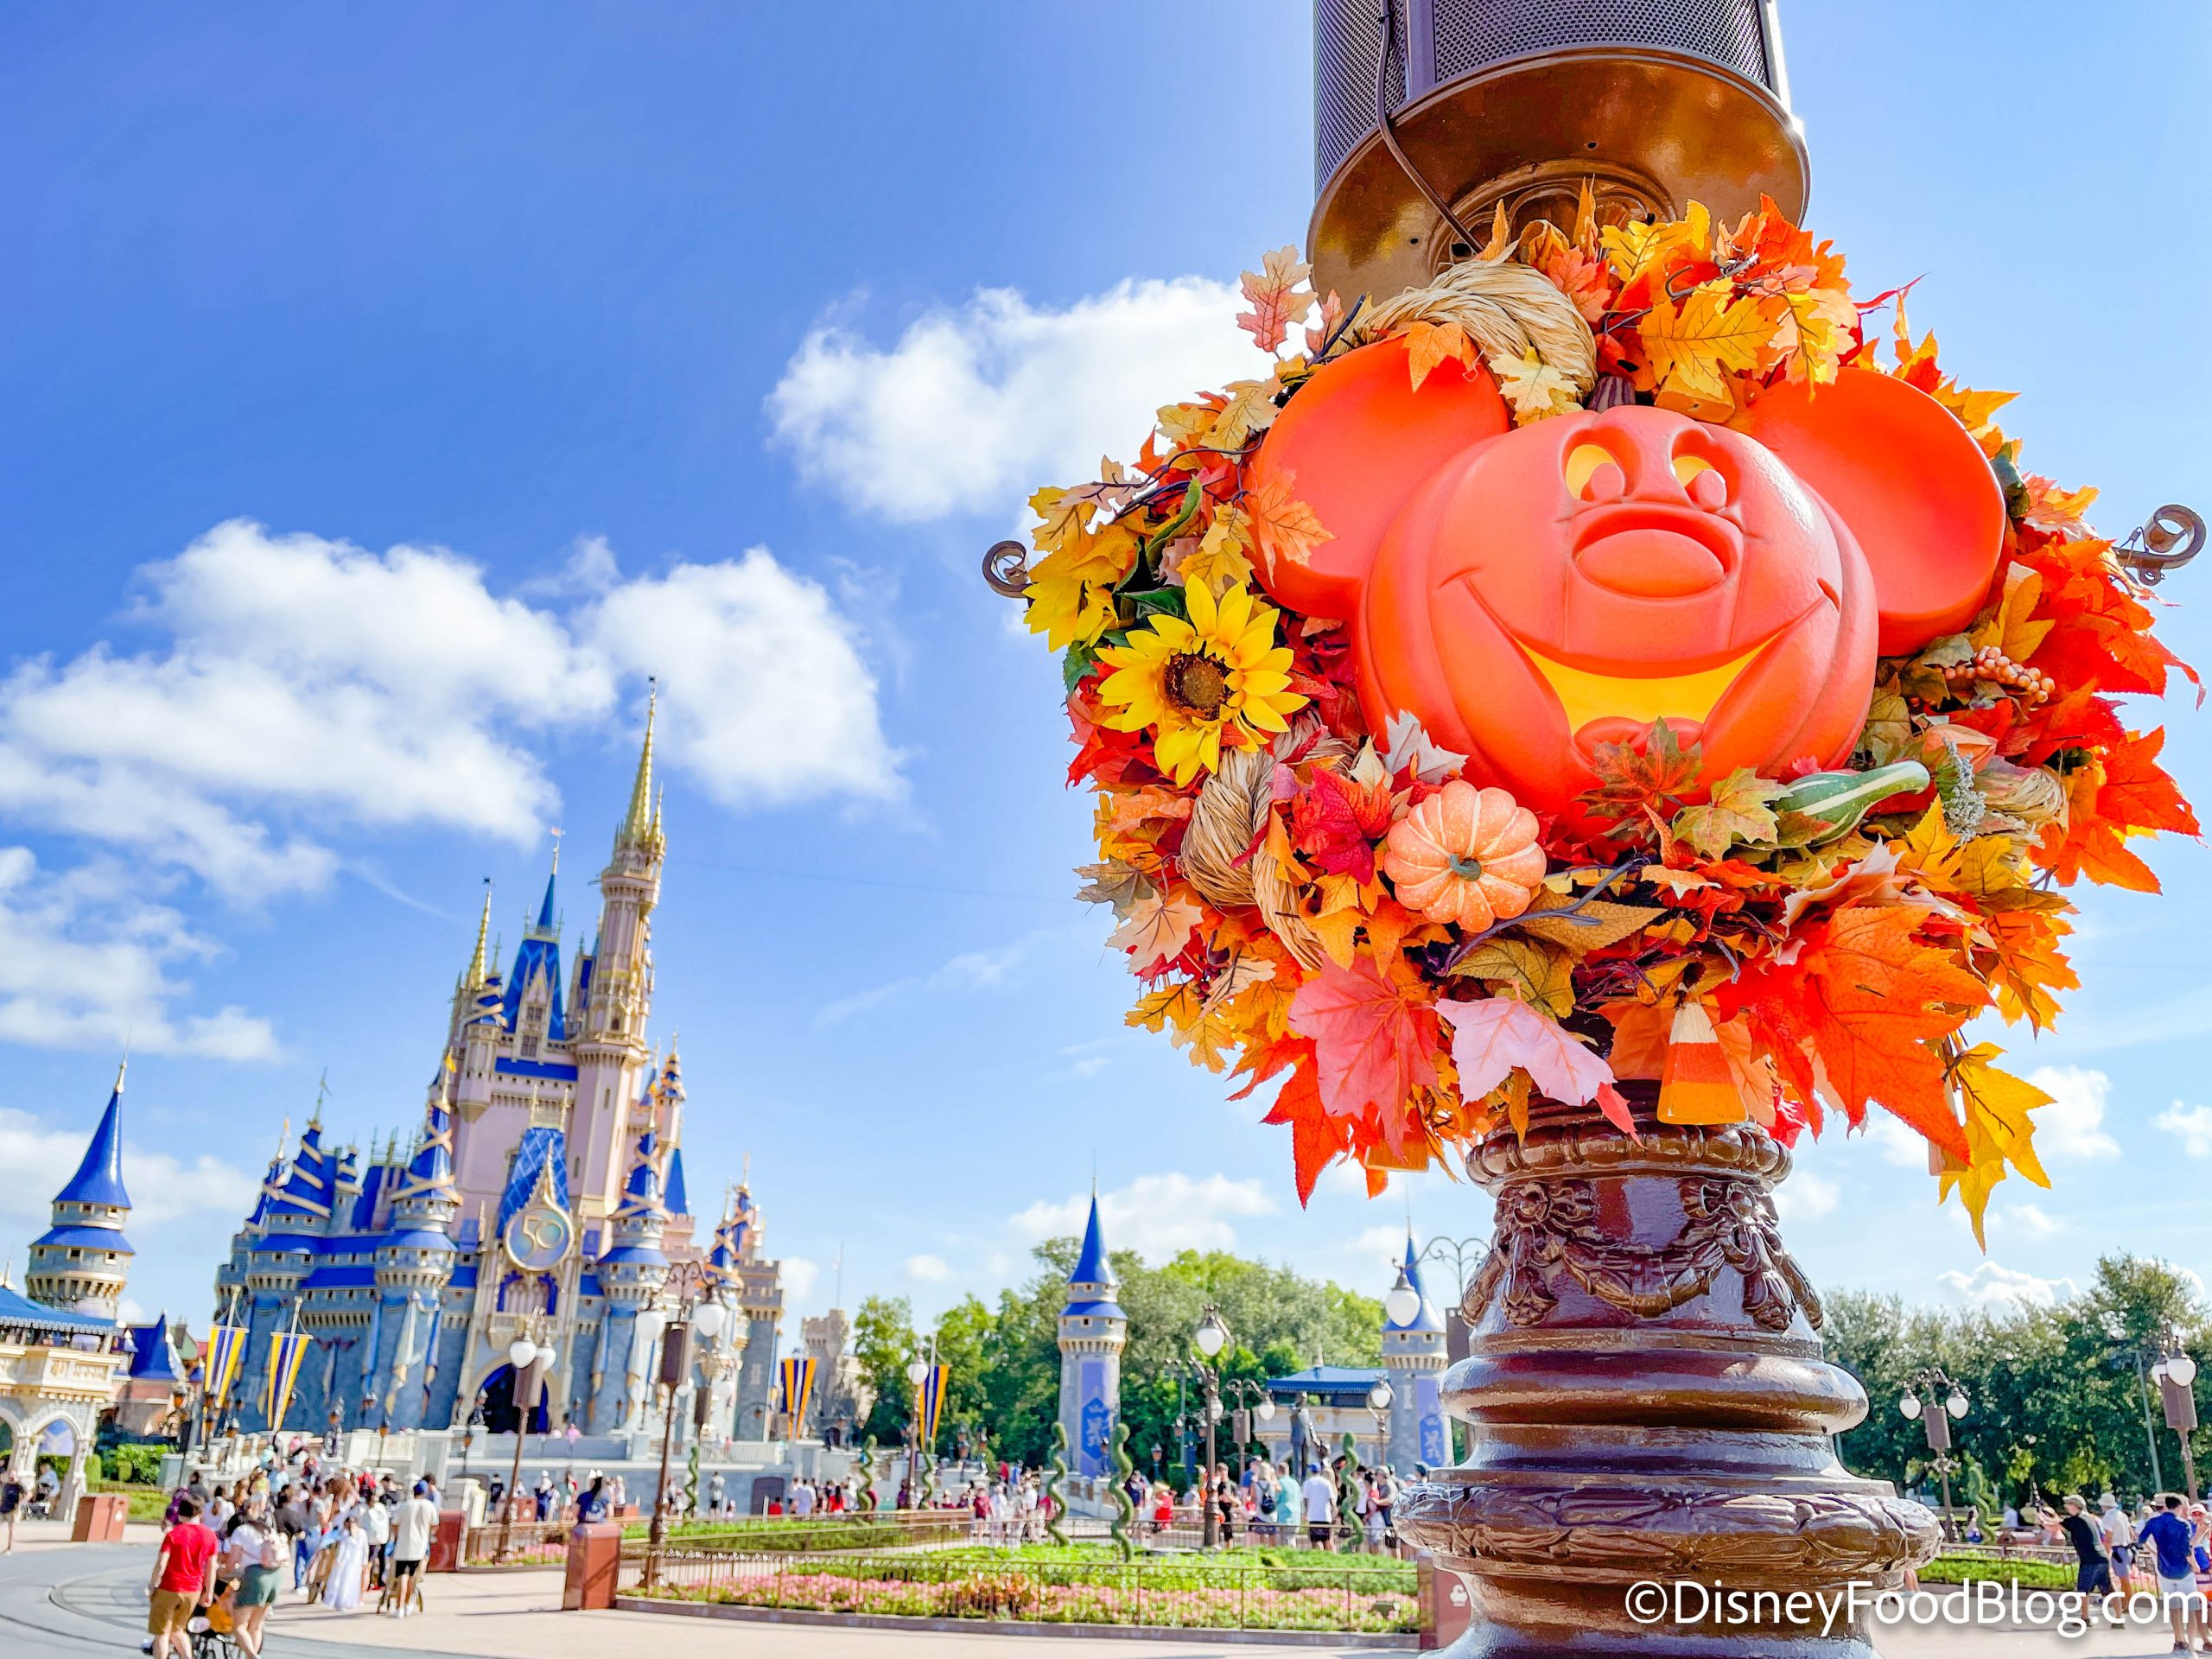 PHOTOS: Halloween CROCS and Spooky Charms Arrive in Disney World